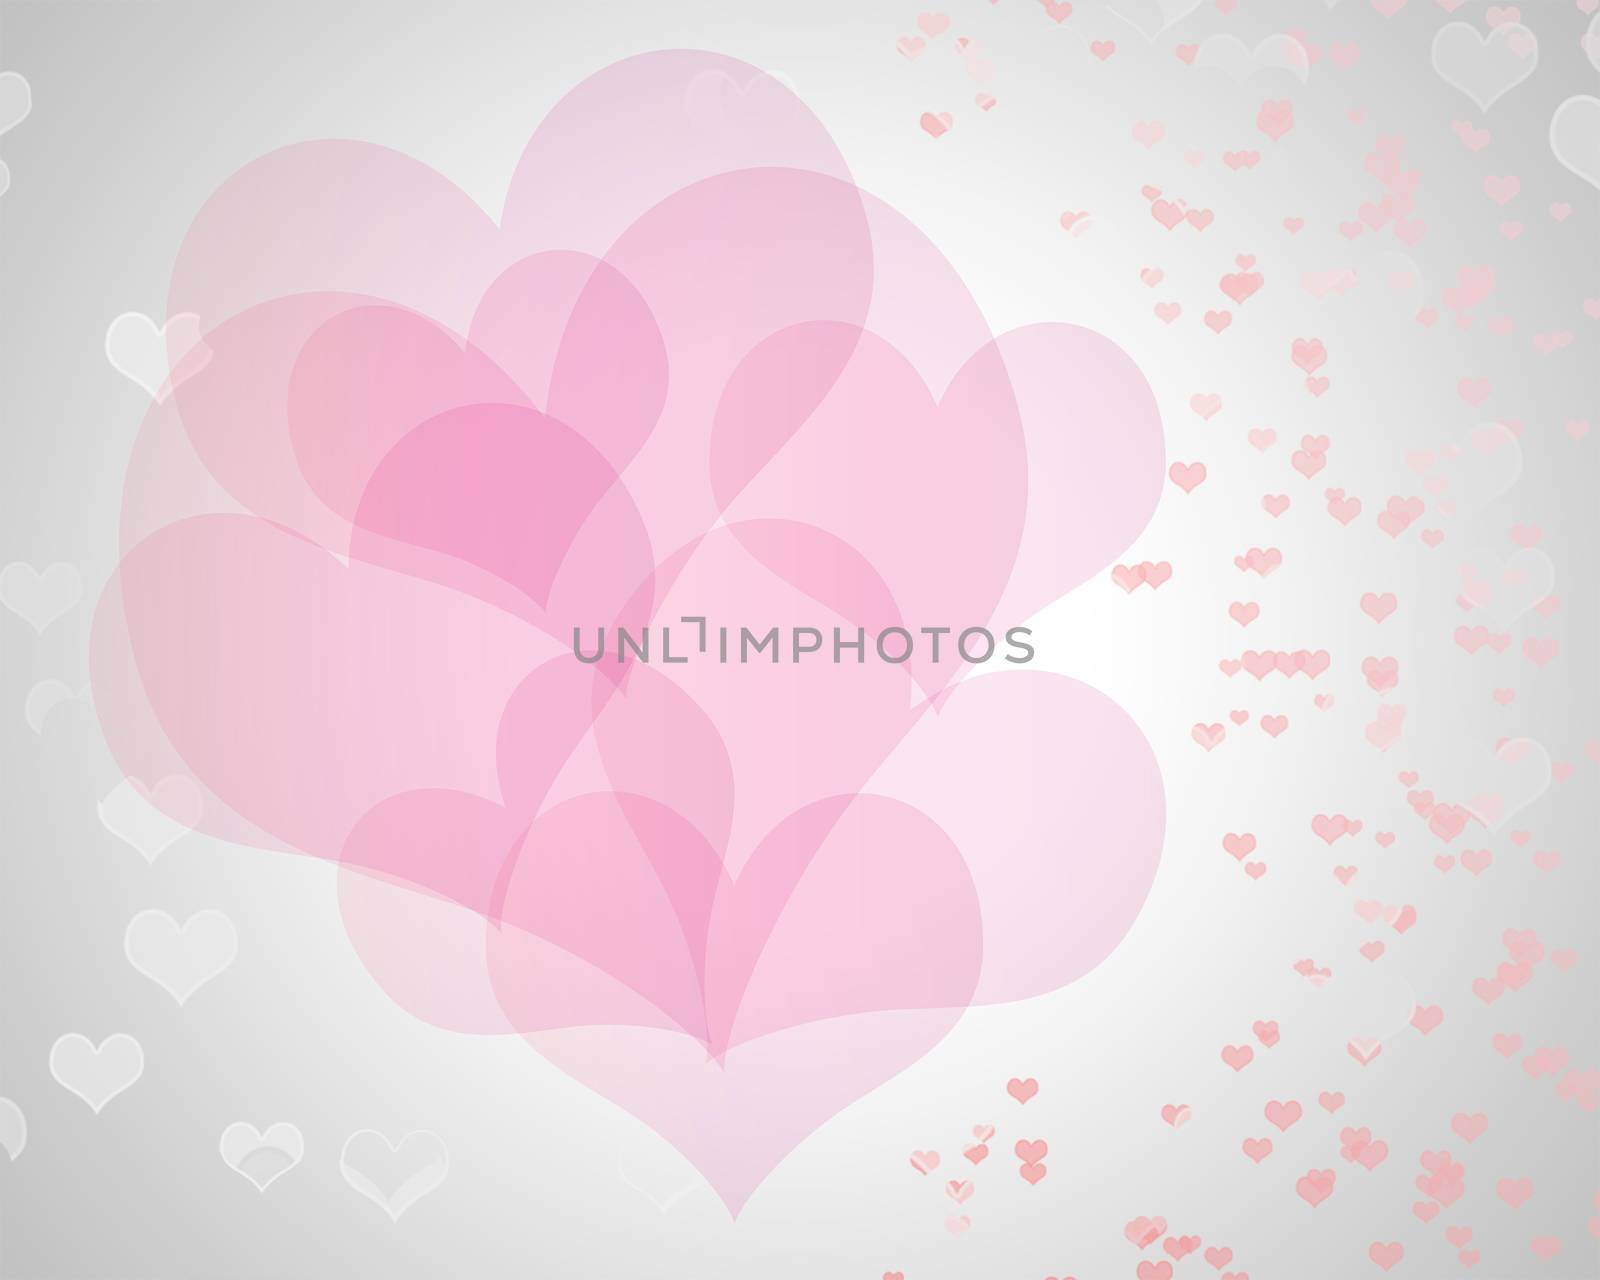 heart of valentine on soft background